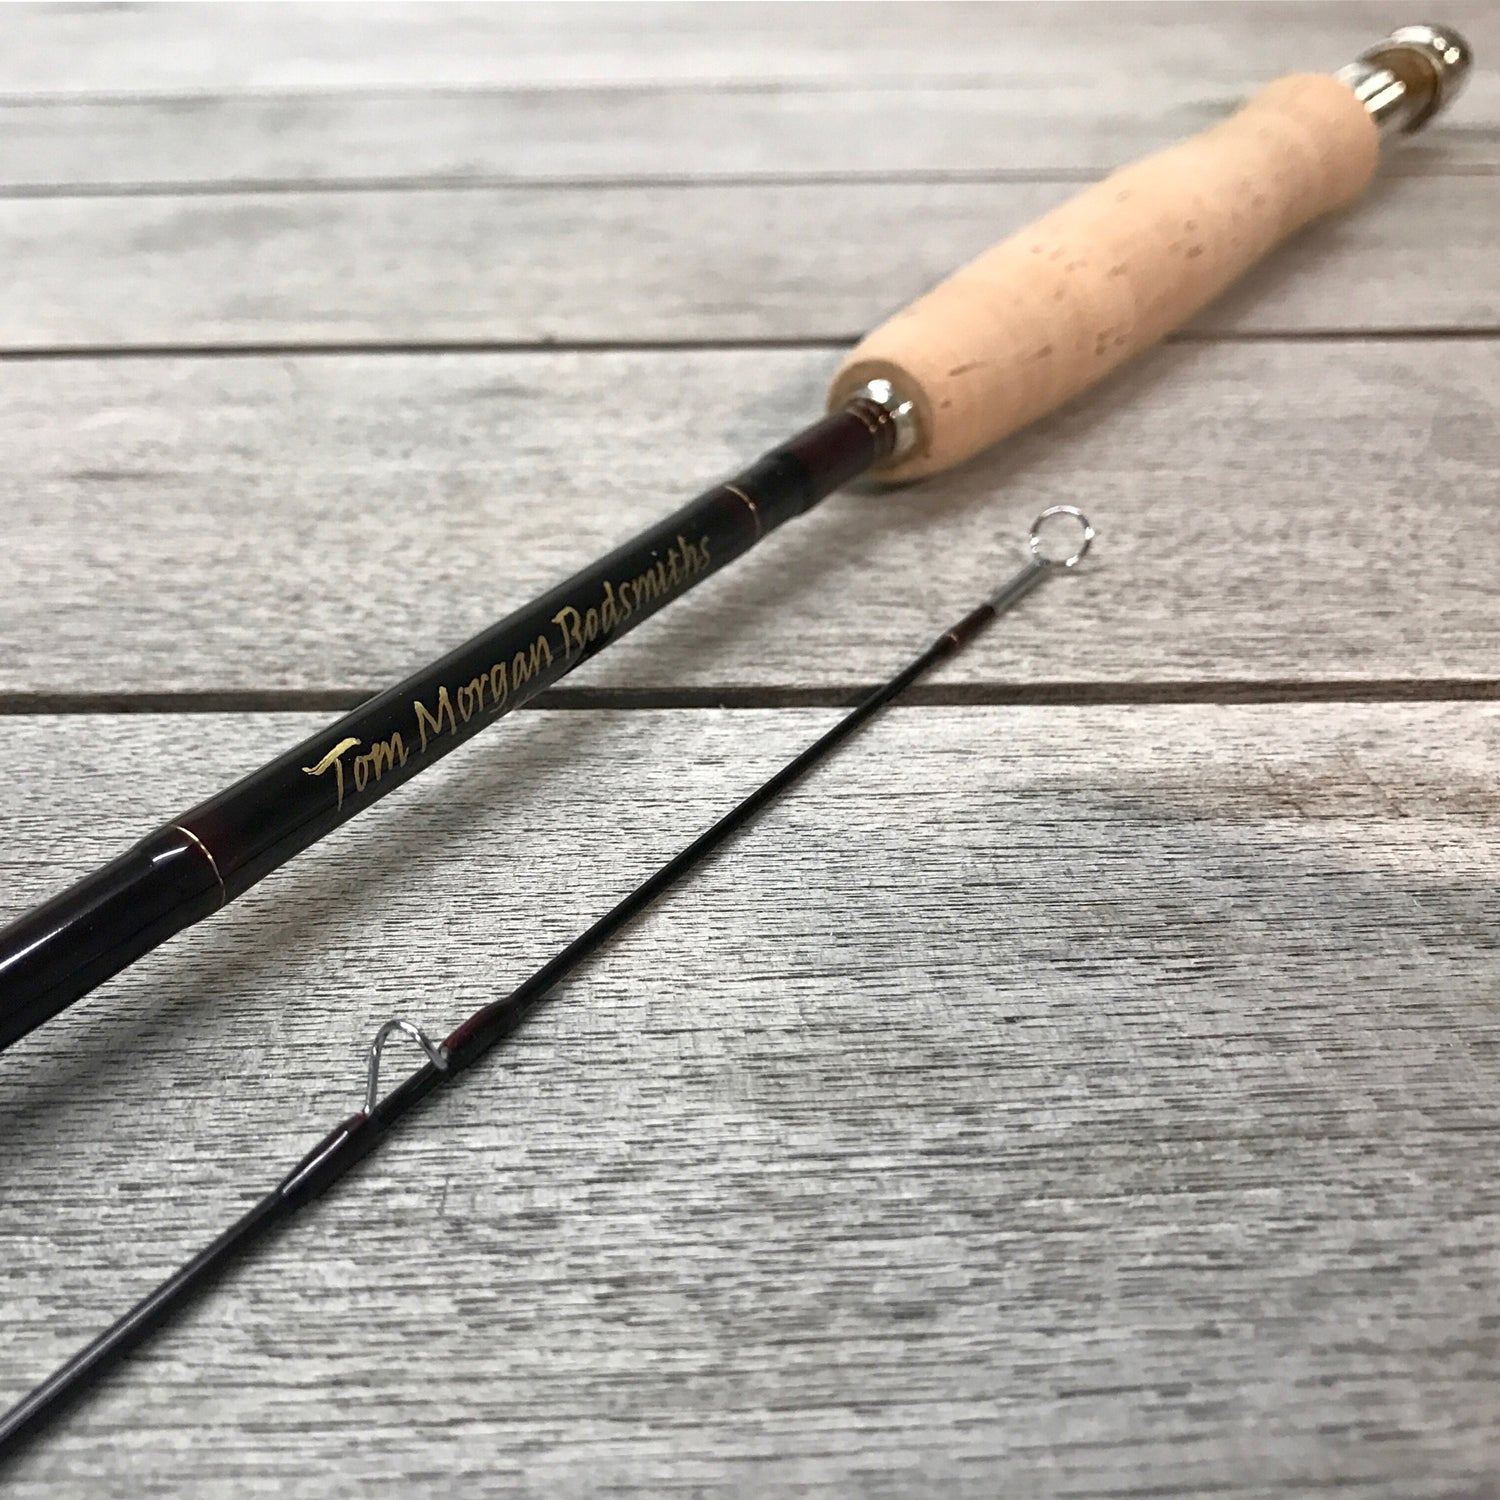 fiberglass fishing rod Archives - Share the Outdoors